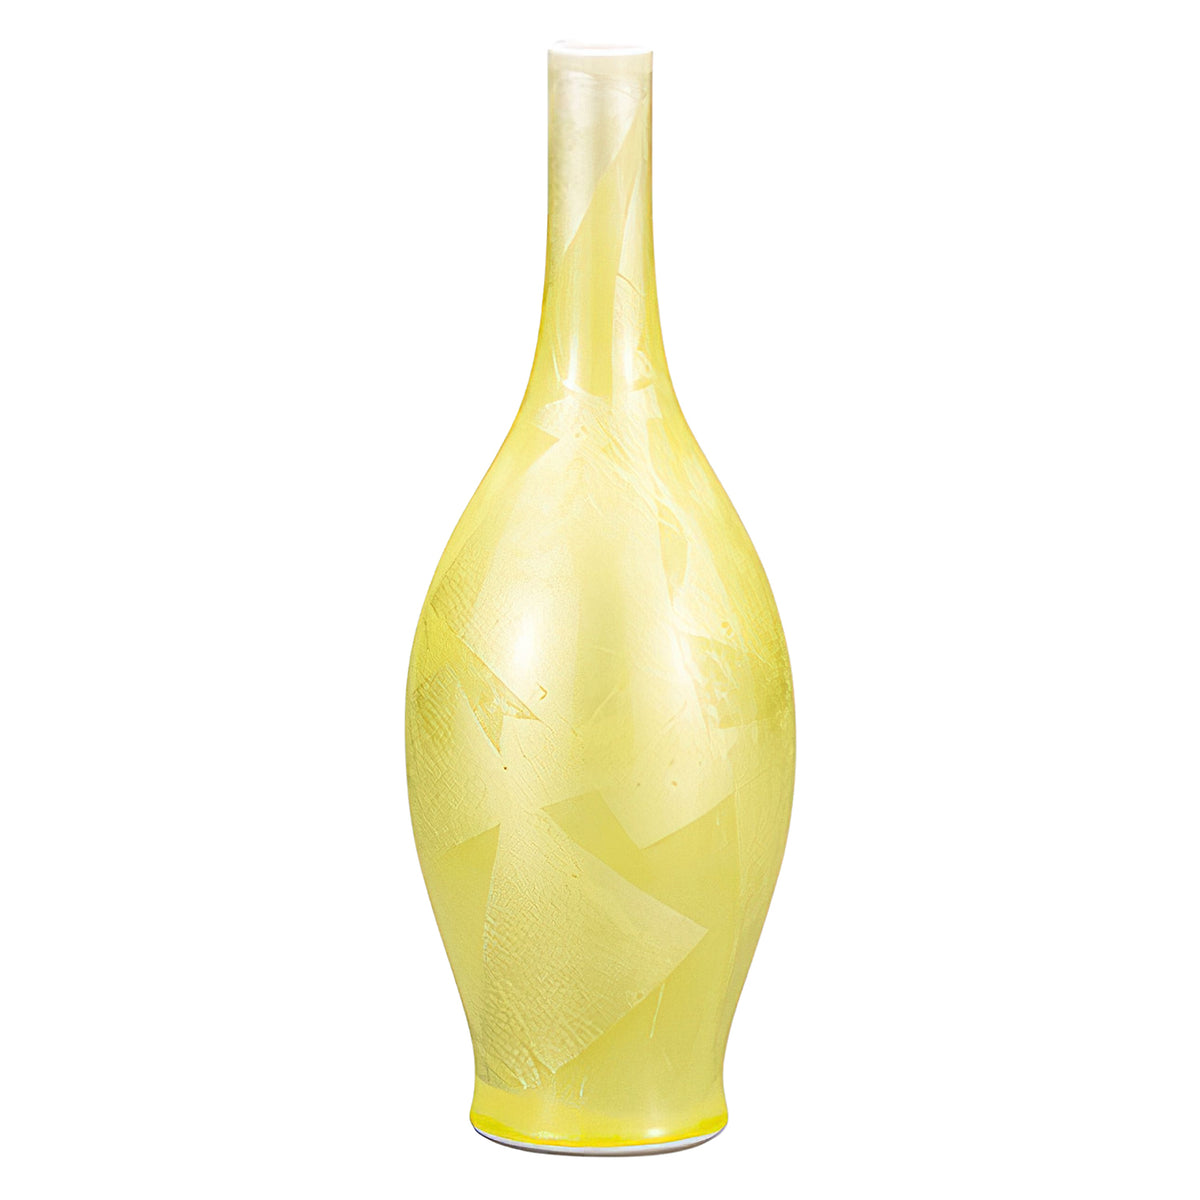 Kutani Ware Porcelain Single-flower Vase